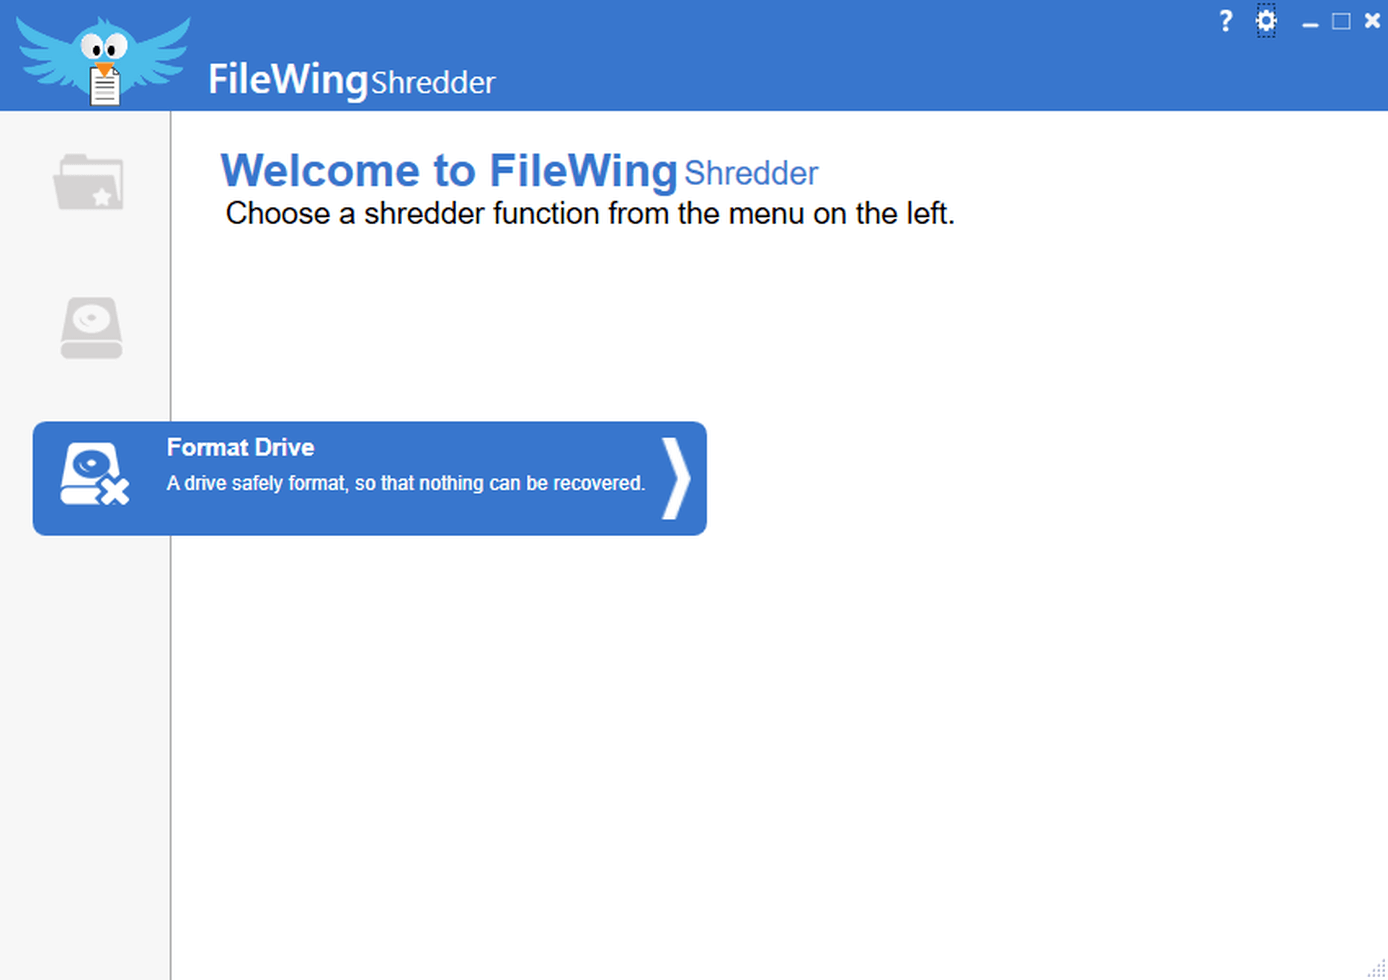 FileWingShredder deletes data safely and irretrievably 